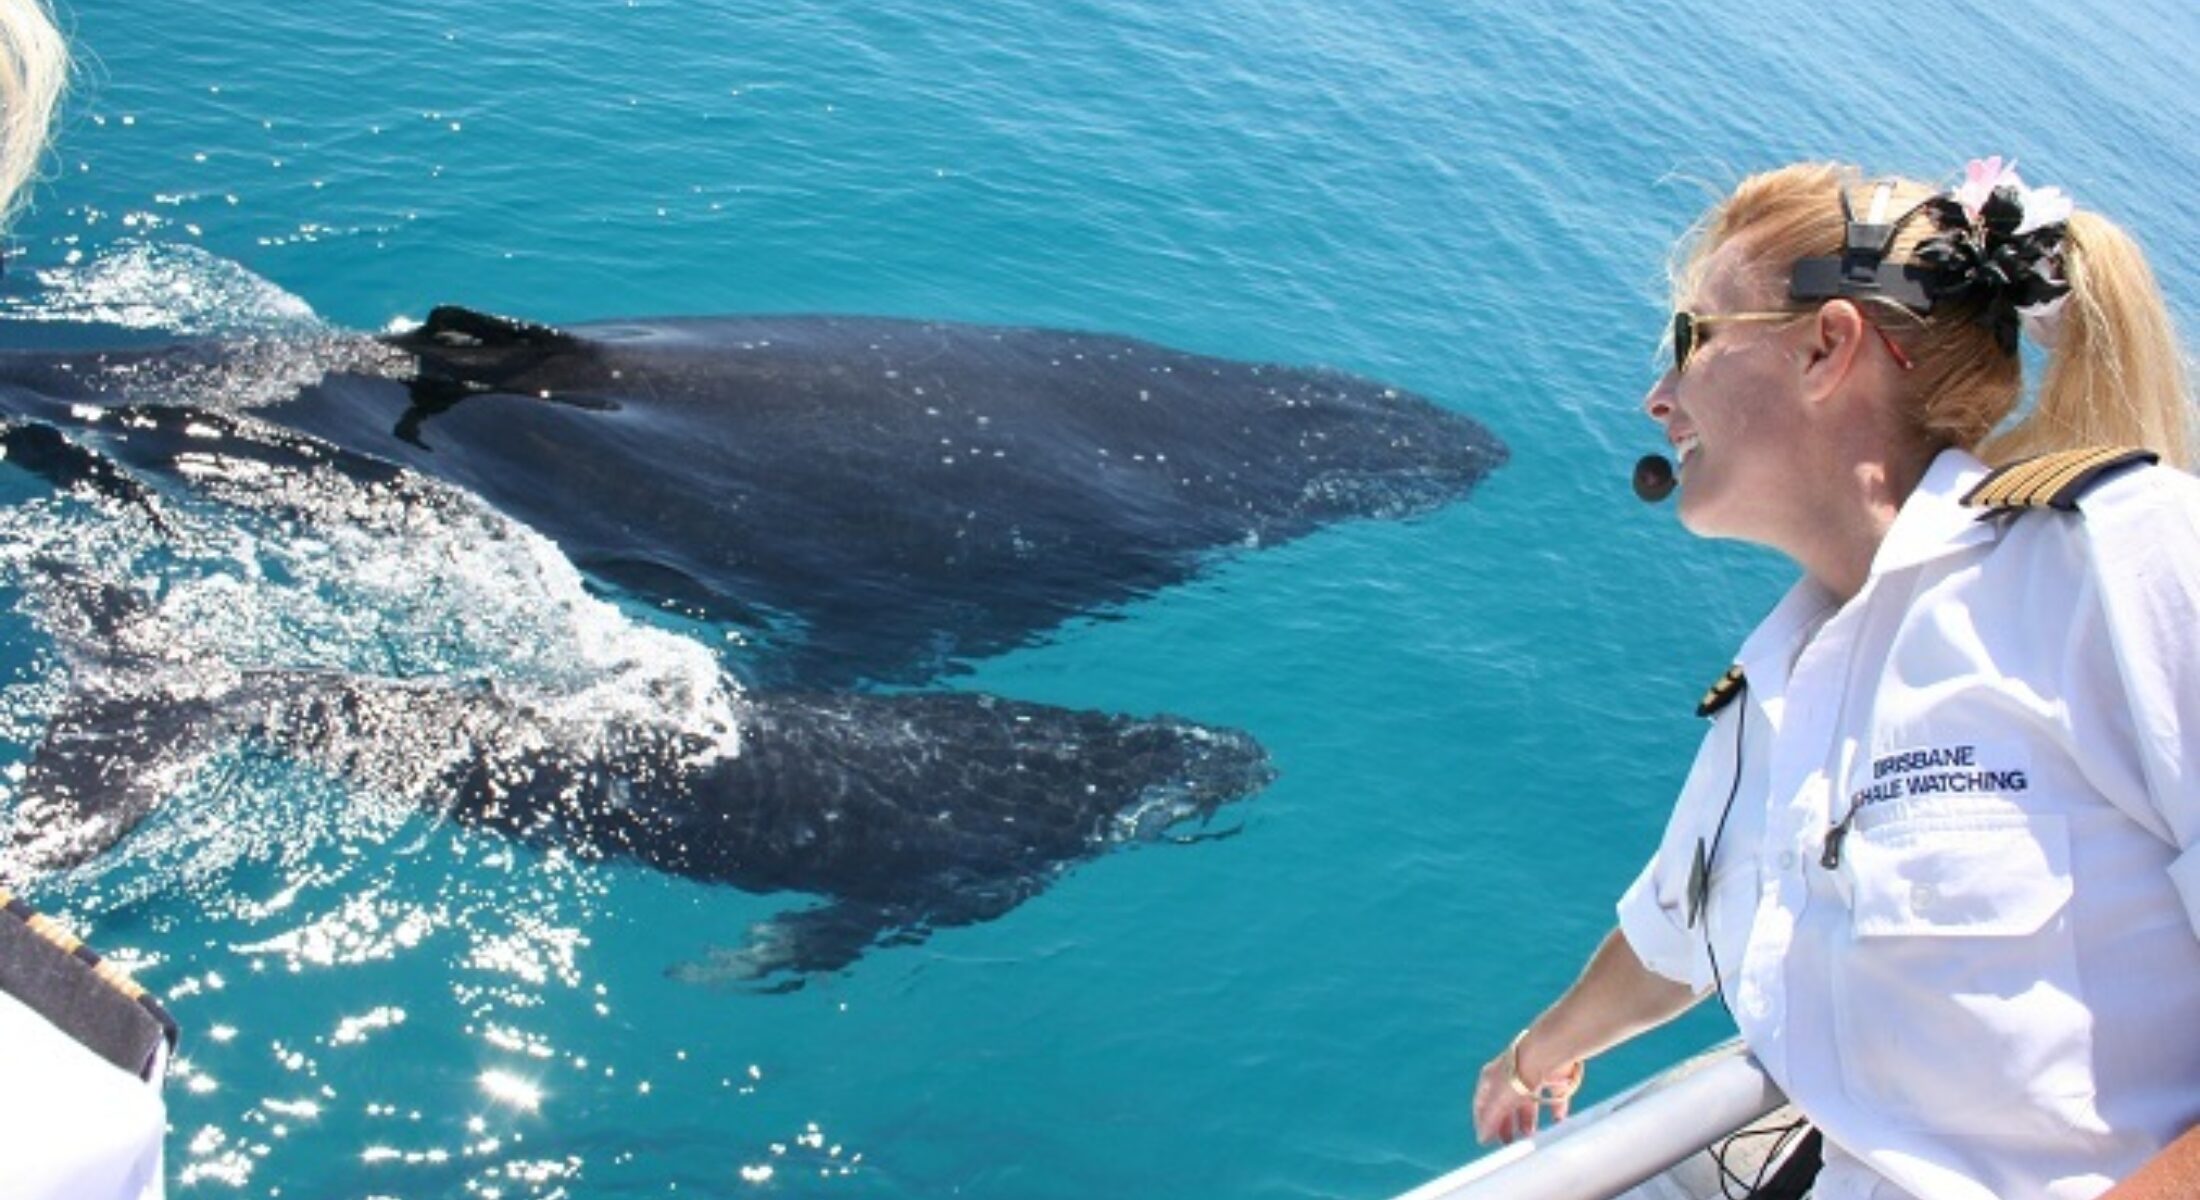 Brisbane Whale Watching Moreton Bay Region Captain Kerry